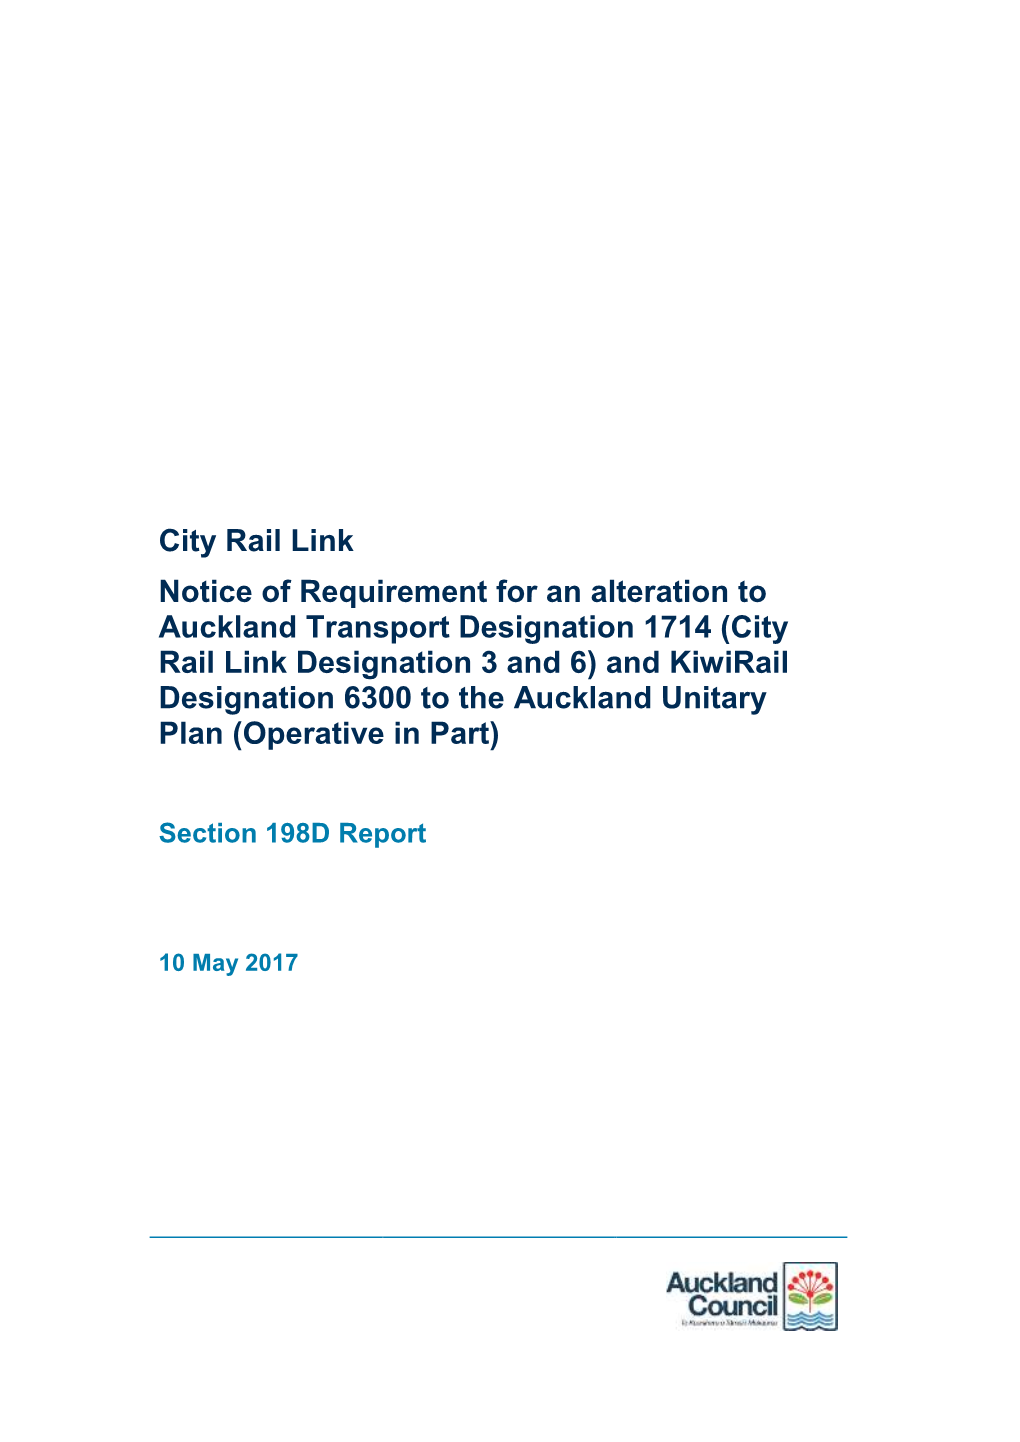 City Rail Link Notice of Requirement: Section 198D Report Mt Eden